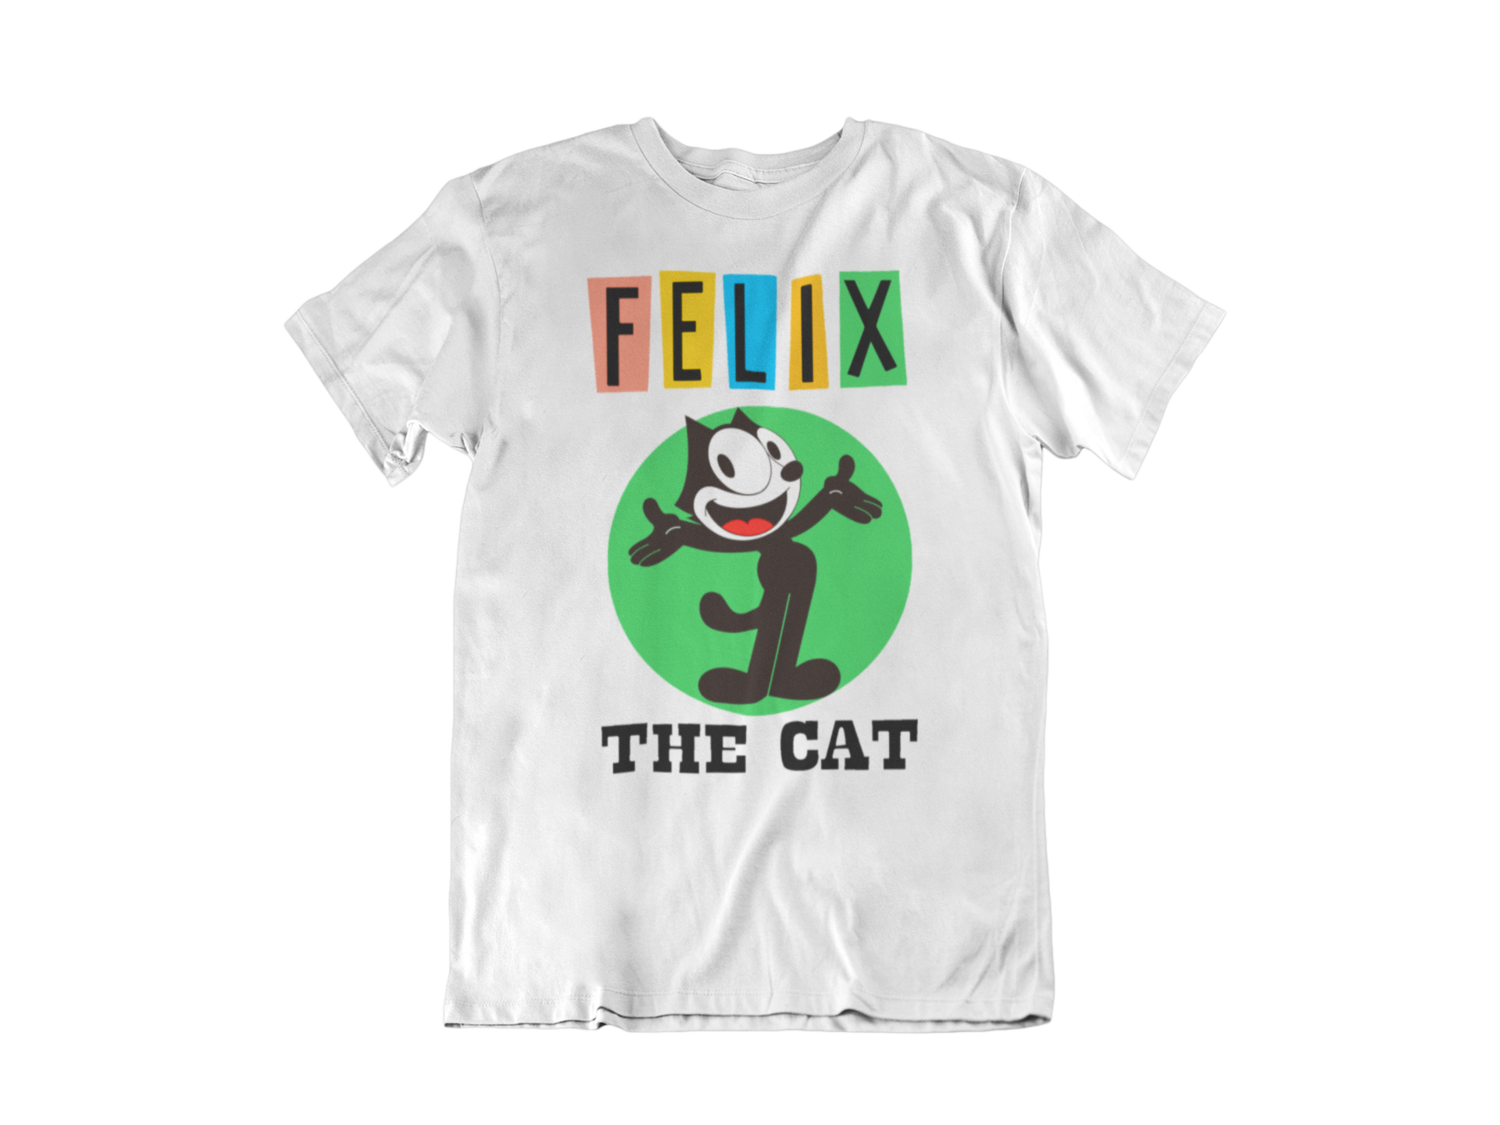 FELIX THE CAT 2 T-SHIRT FOR MEN